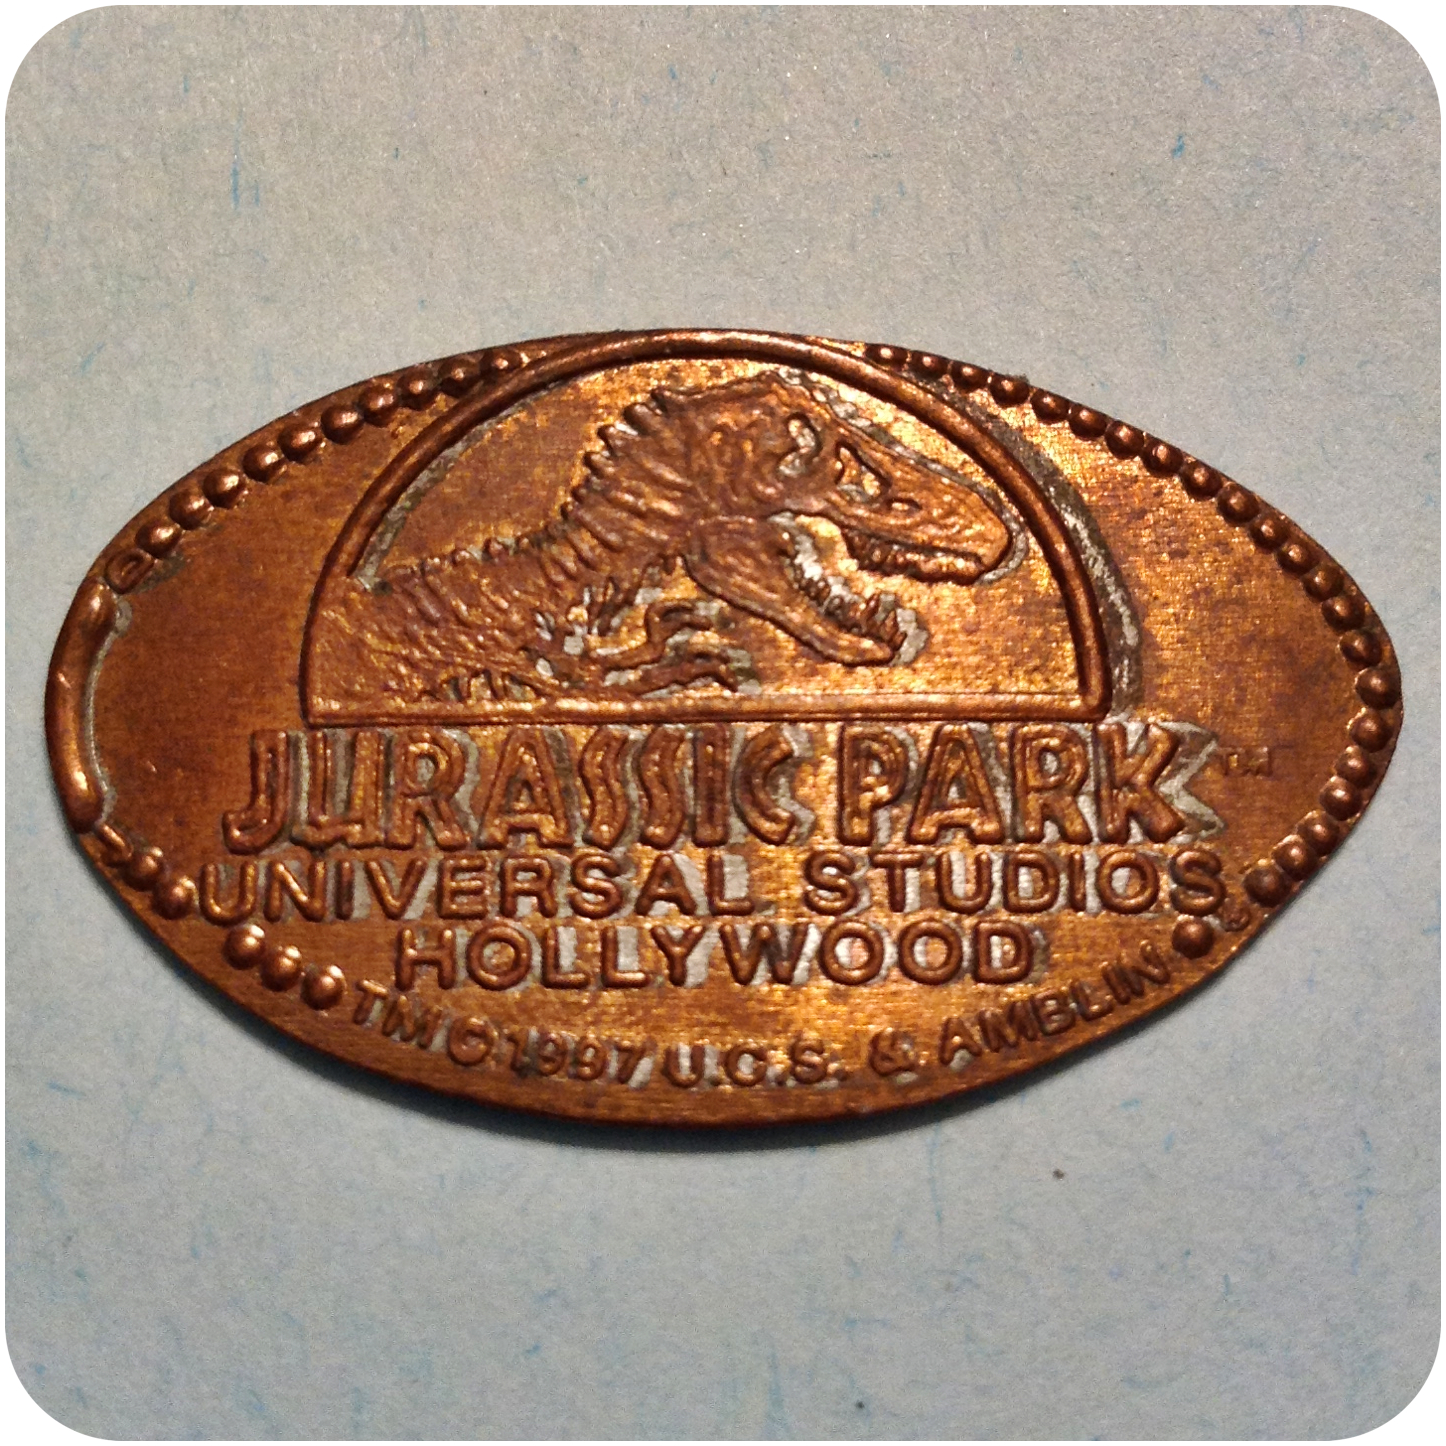 T-Rex, Jurassic Park, Universal Studios Hollywood, Universal City, CA California